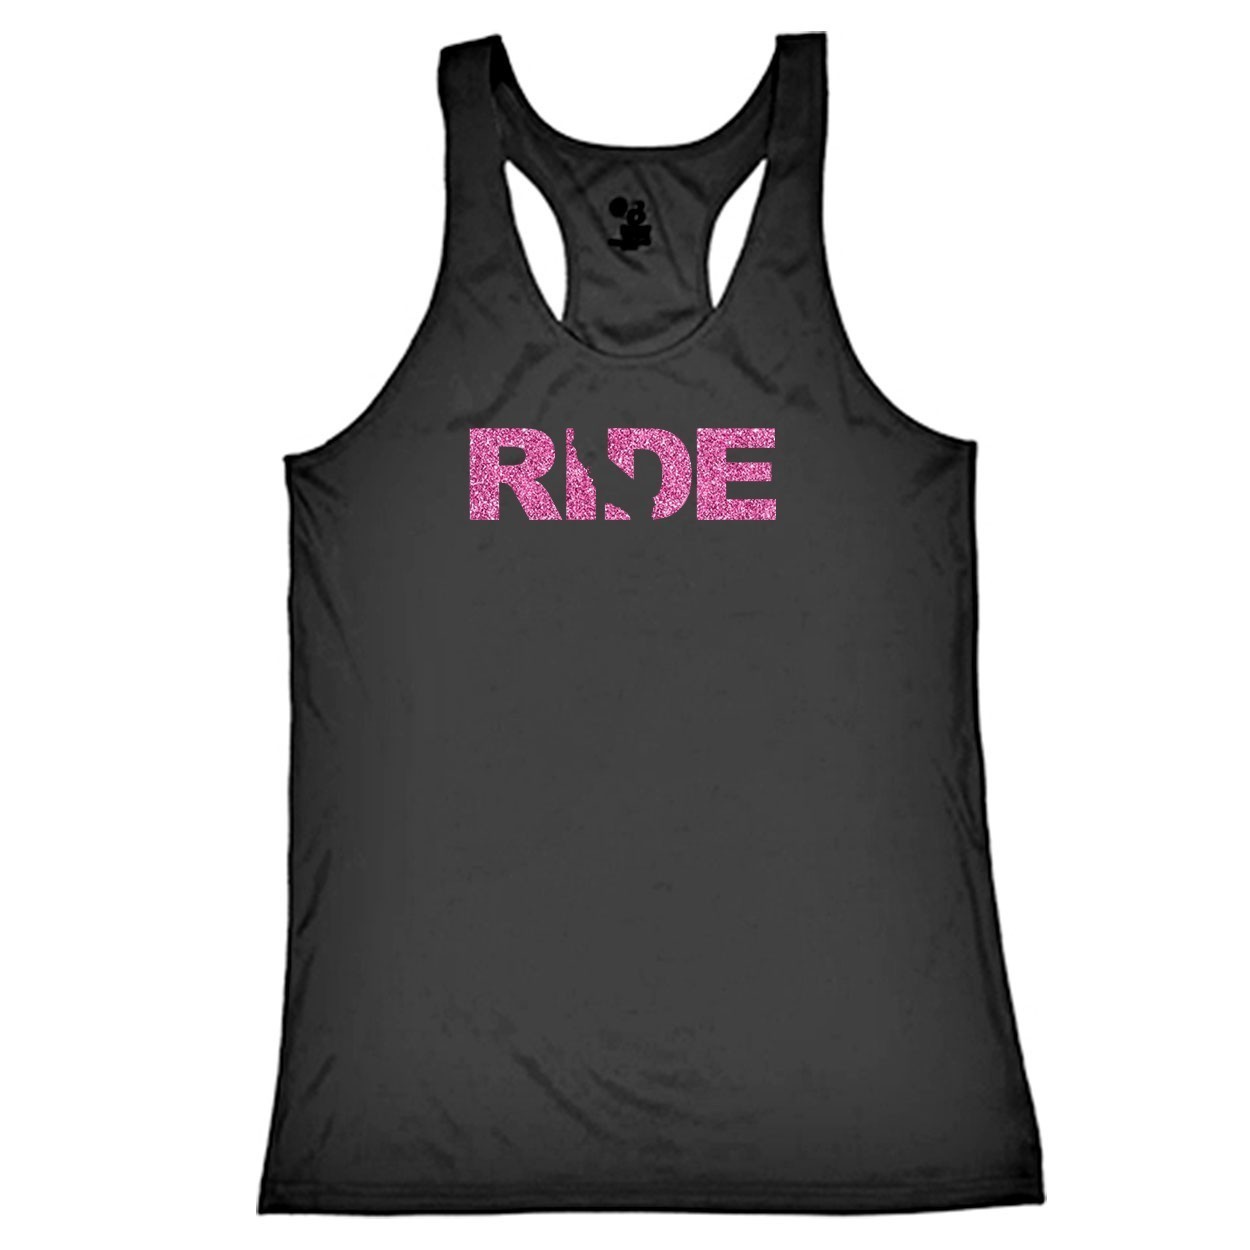 Ride California Classic Youth Girls Performance Racerback Tank Top Black (Glitter Pink Logo)